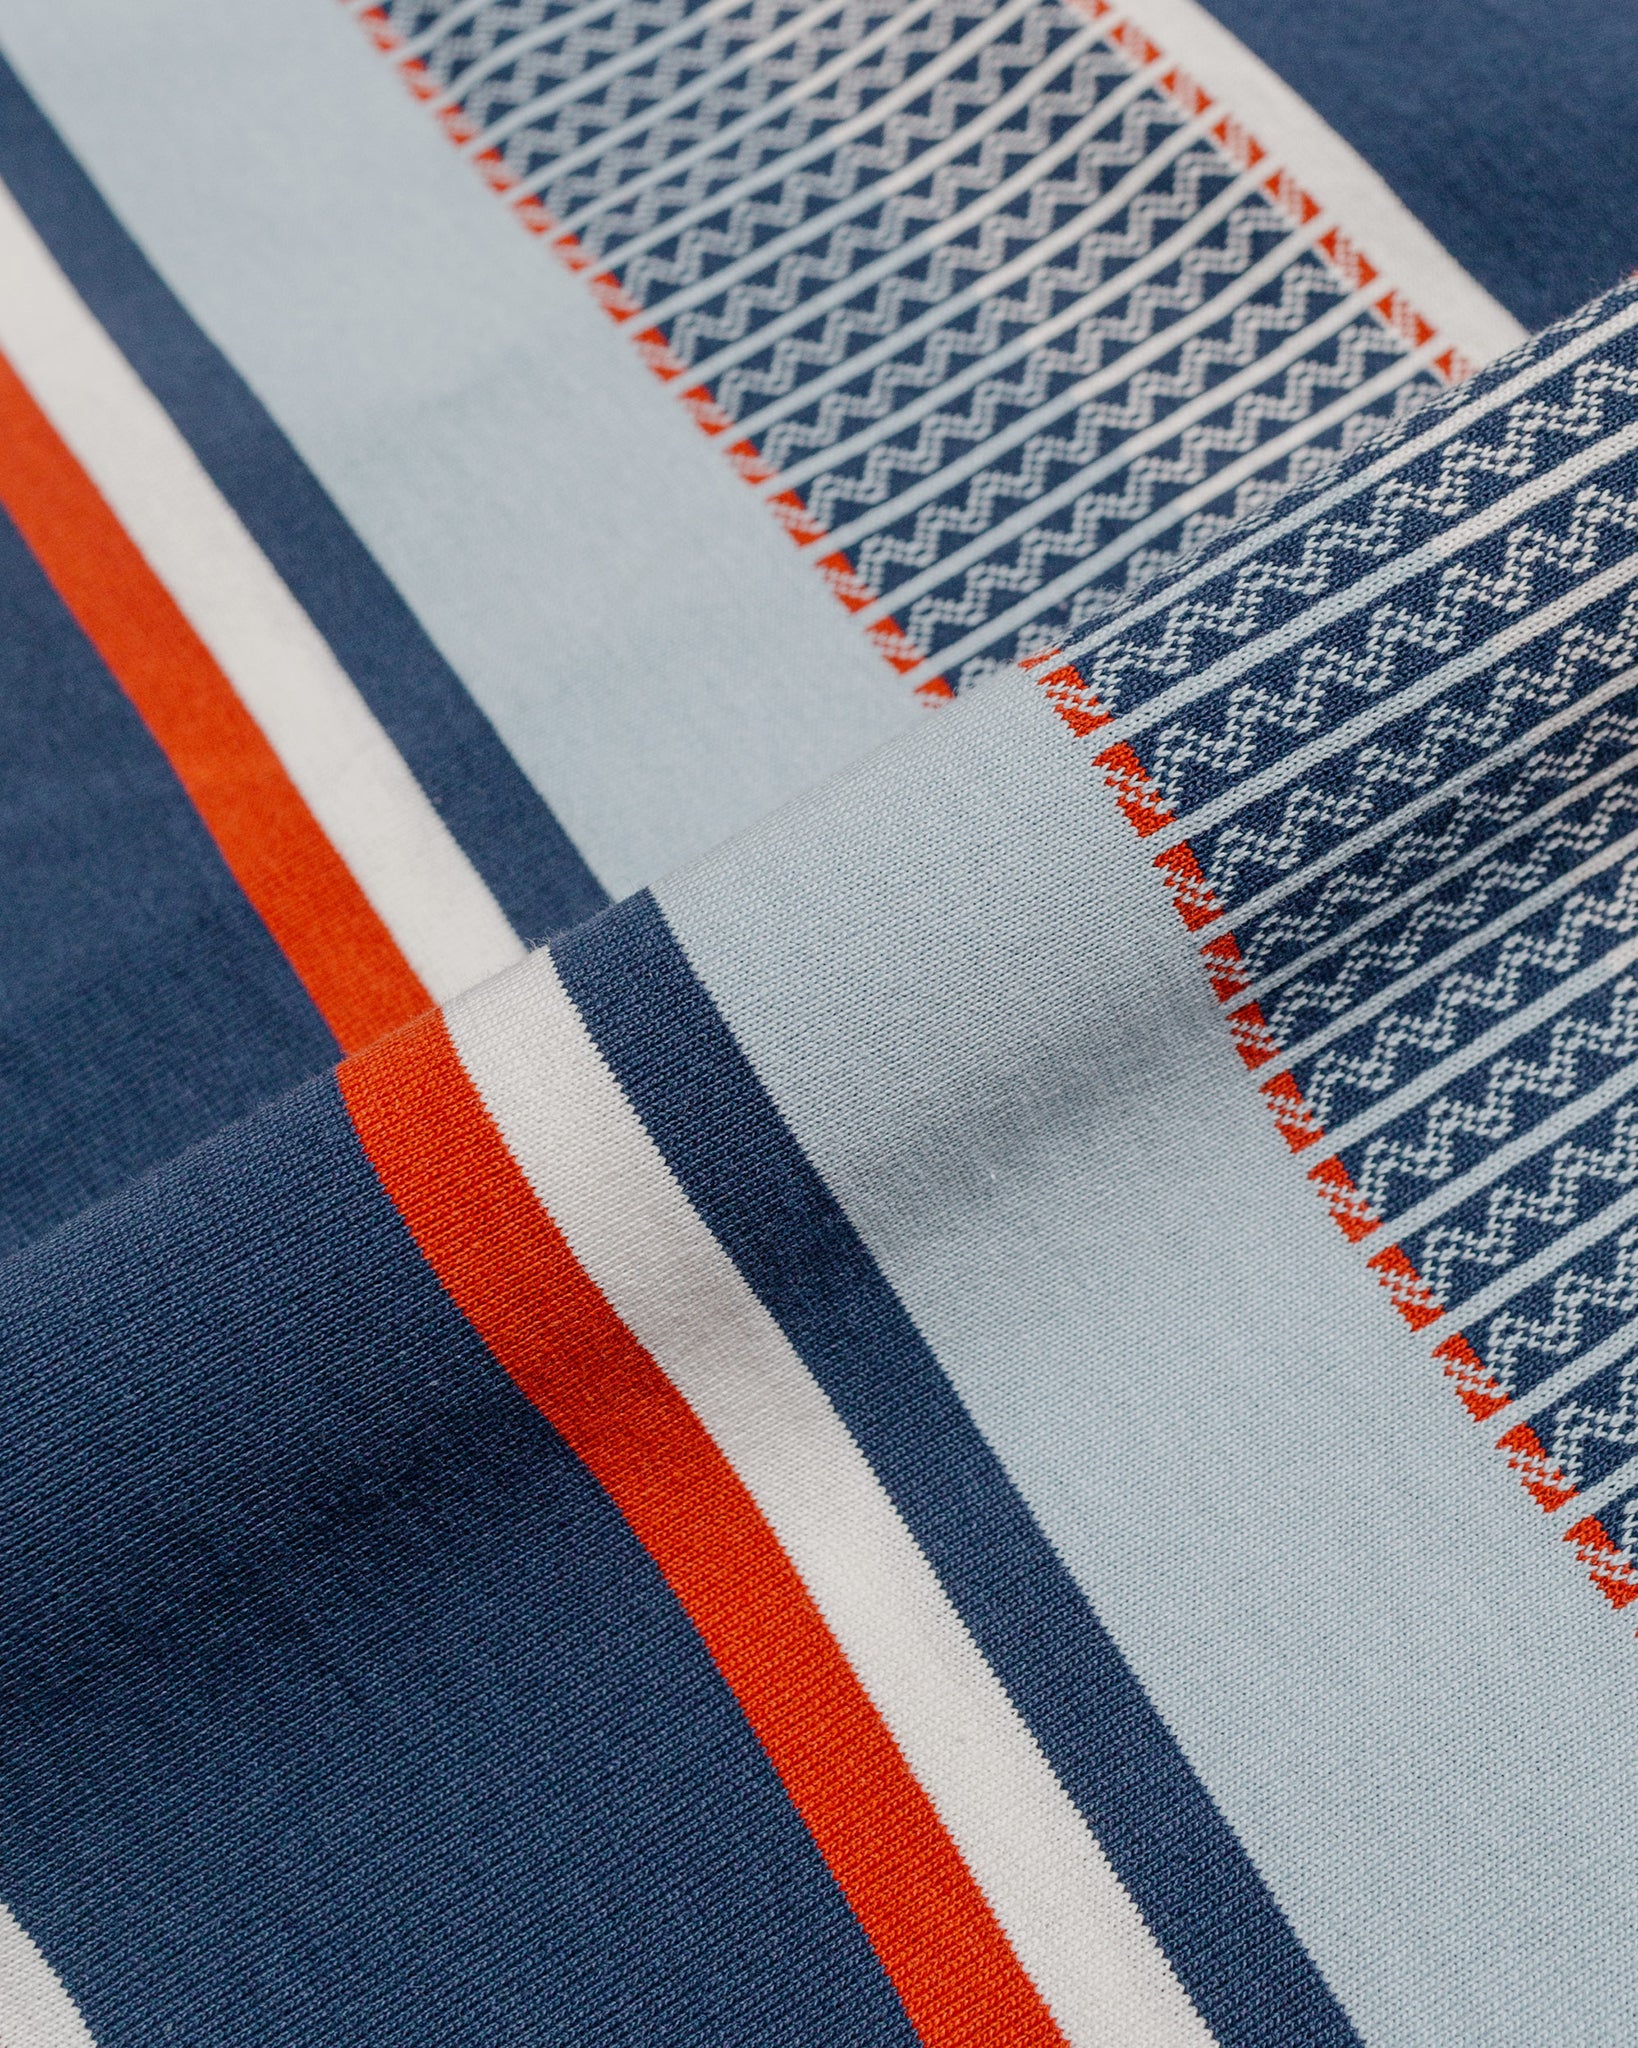 The Real McCoy's MC24017 Jacquard Knit Stripe Tee Navy fabric